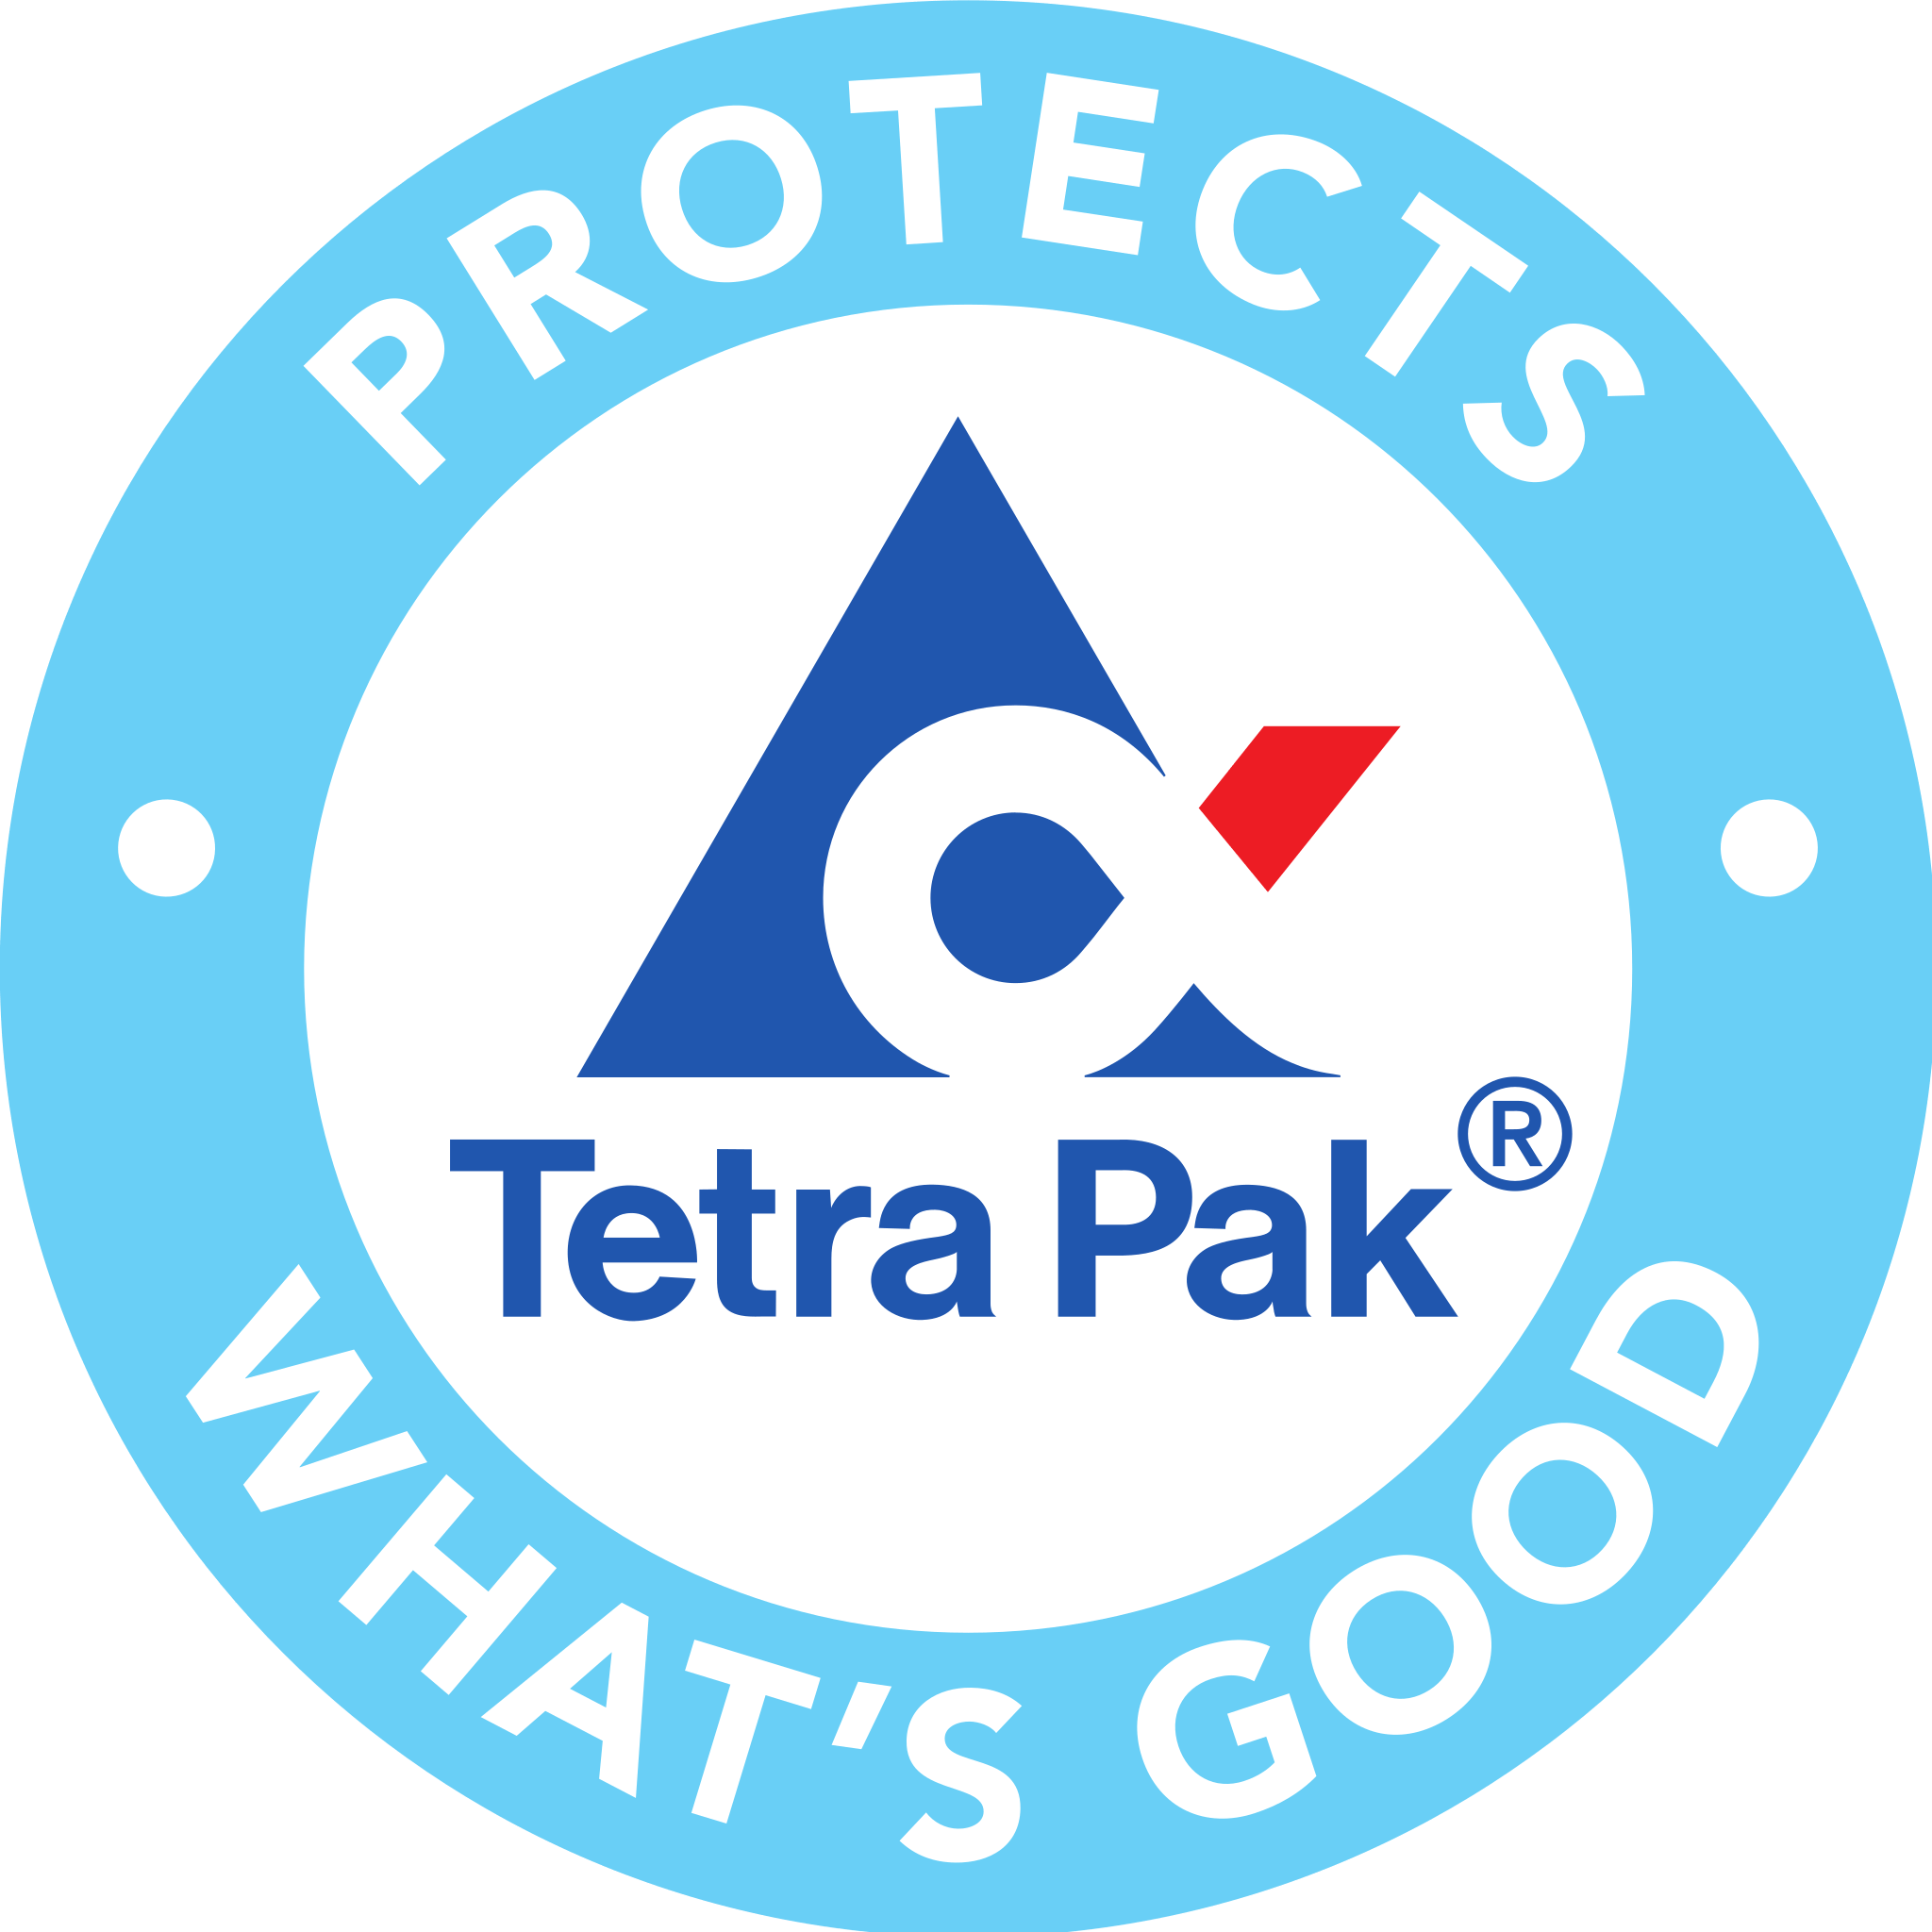 TetraPak logo